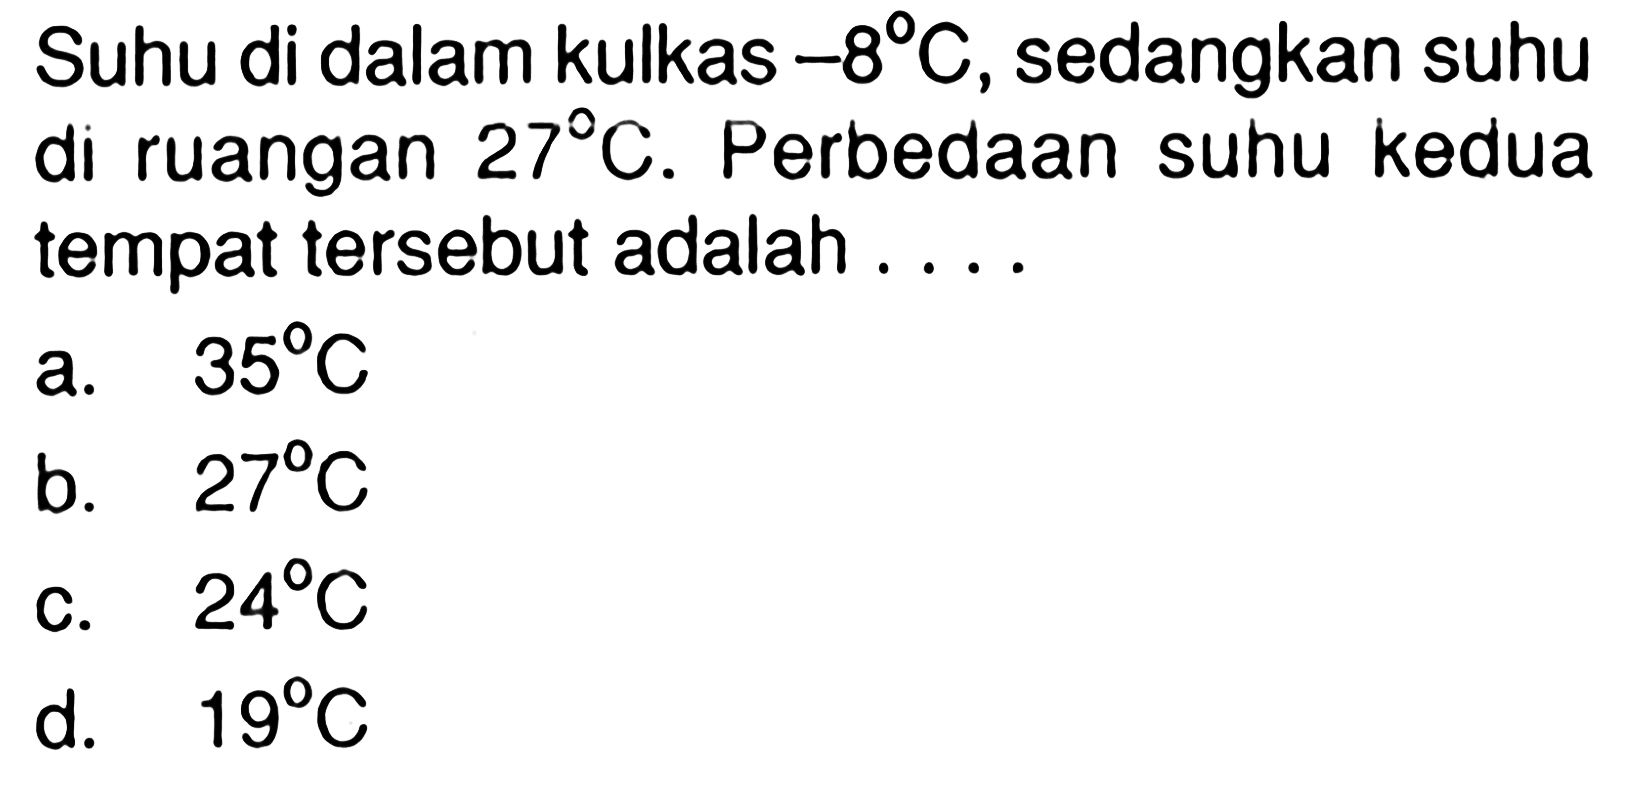 Suhu di dalam kulkas -8 C, sedangkan suhu di ruangan 27 C. Perbedaan suhu kedua tempat tersebut adalah... a. 35 C b. 27 C c. 24 C d. 19 C